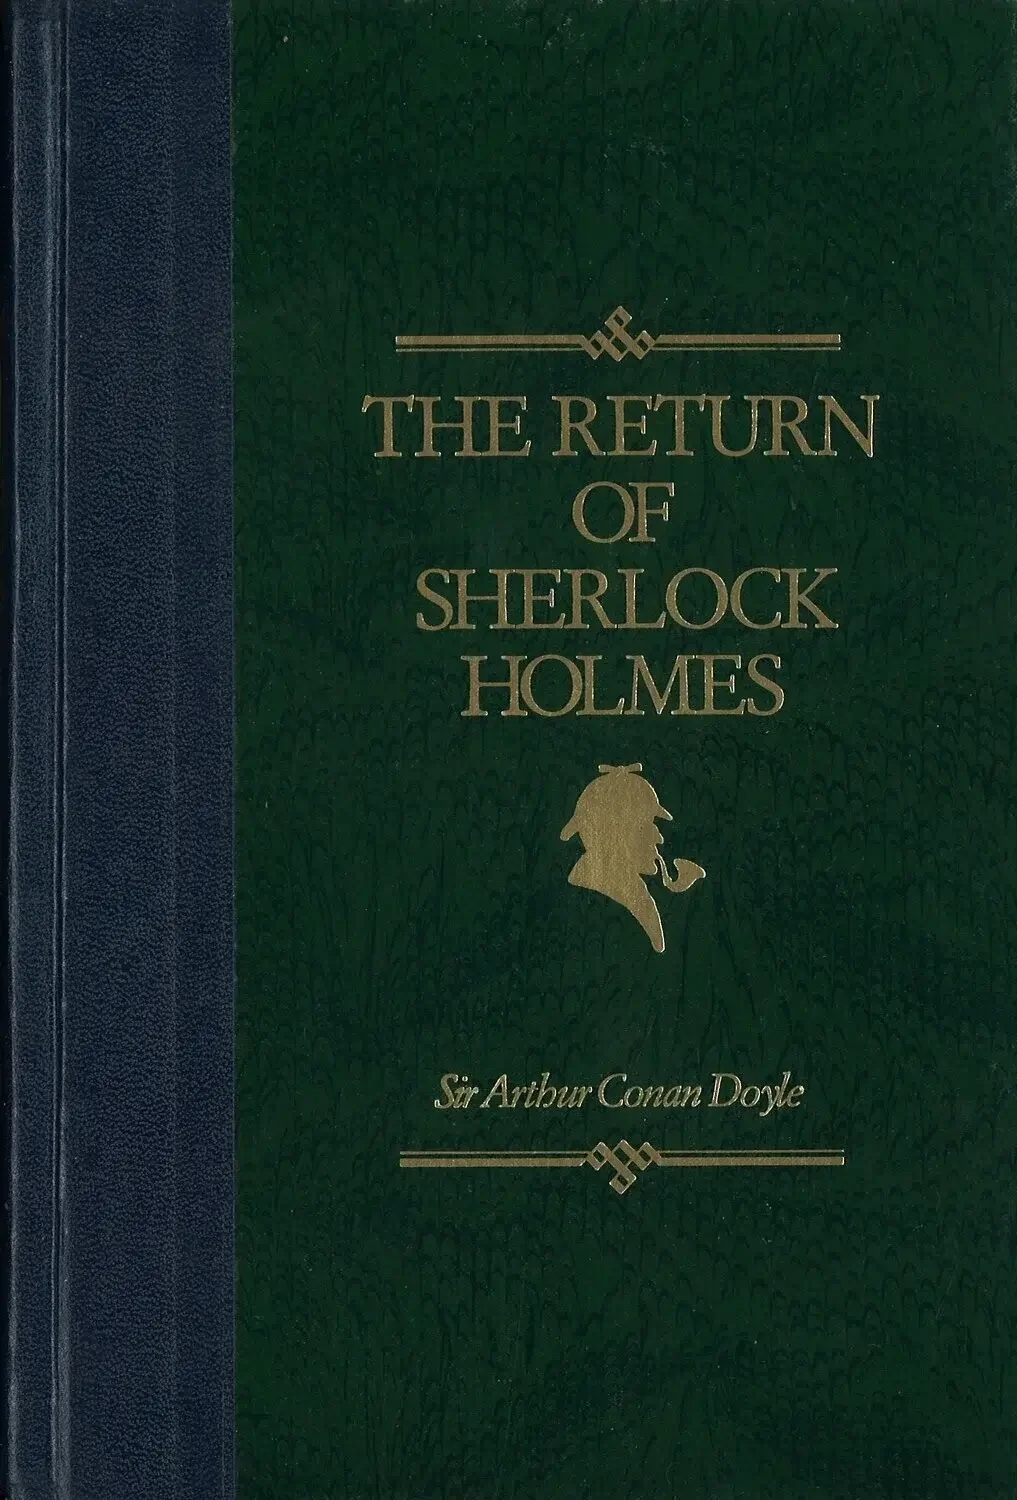 The Return of Sherlock Holmes, Sir Arthur Conan Doyle